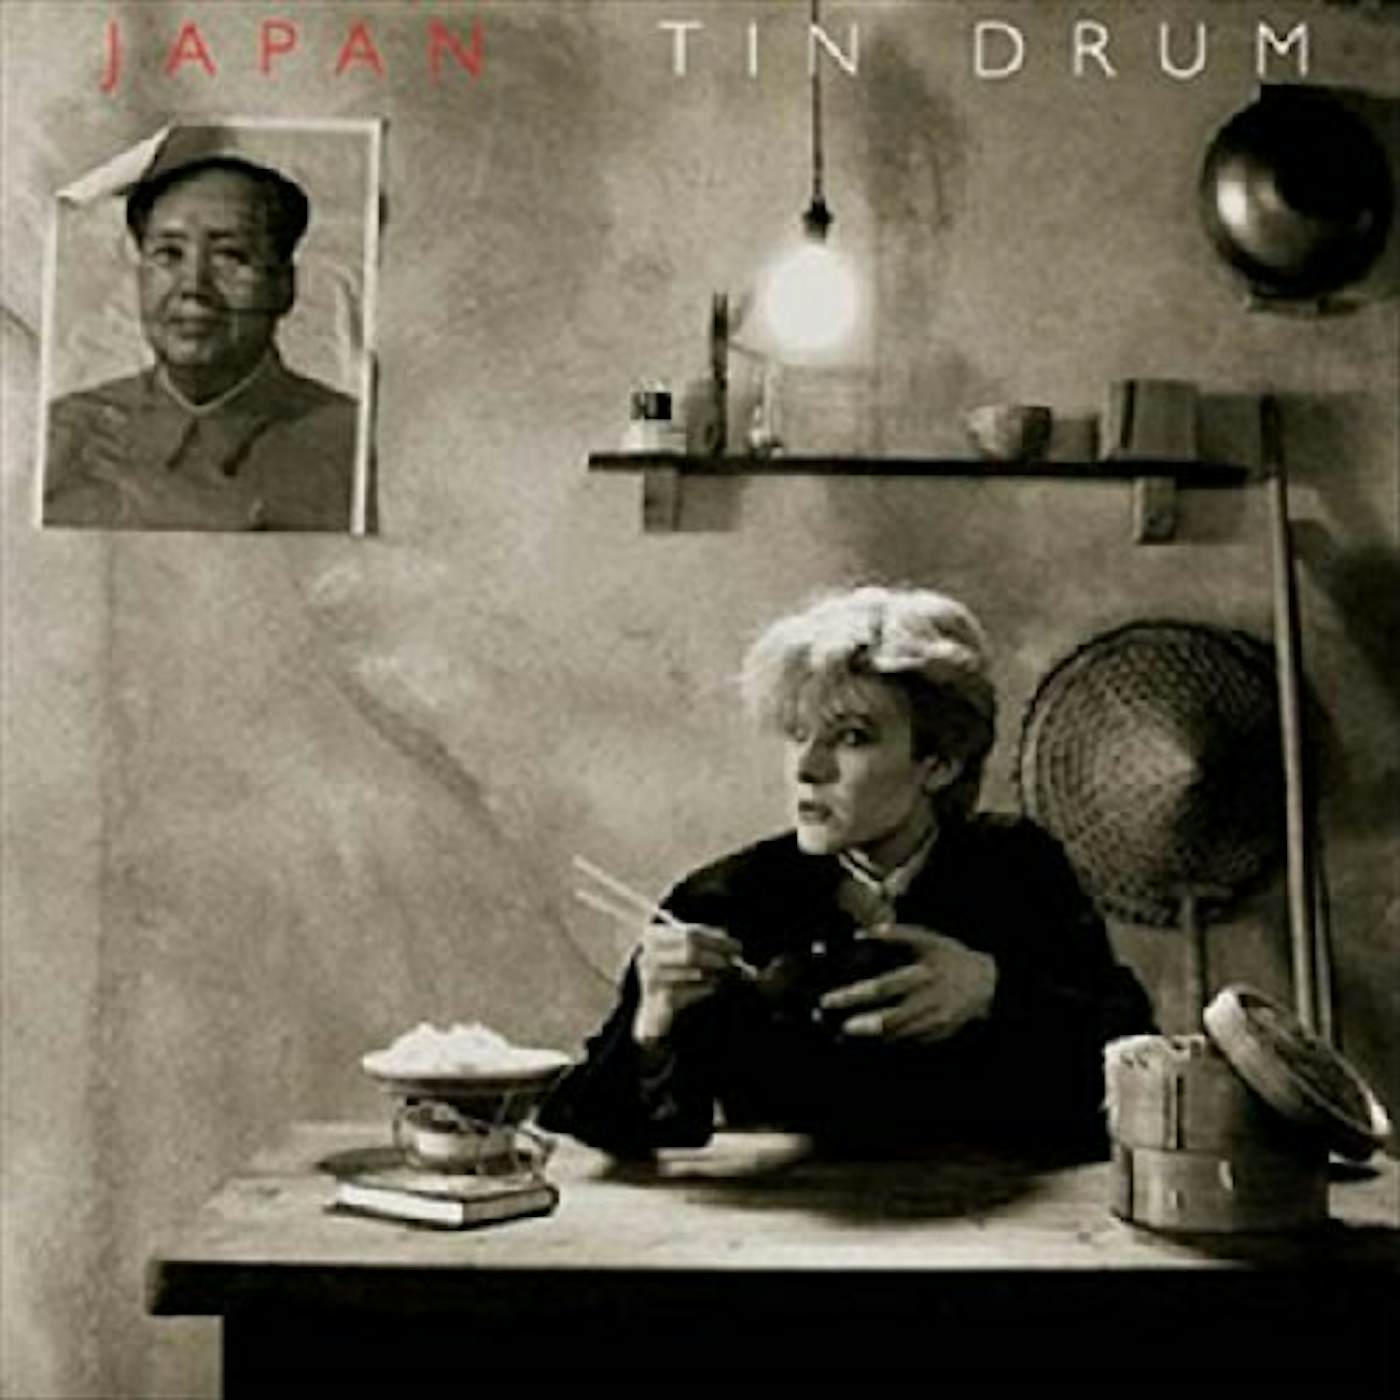 Japan Tin Drum Vinyl Record